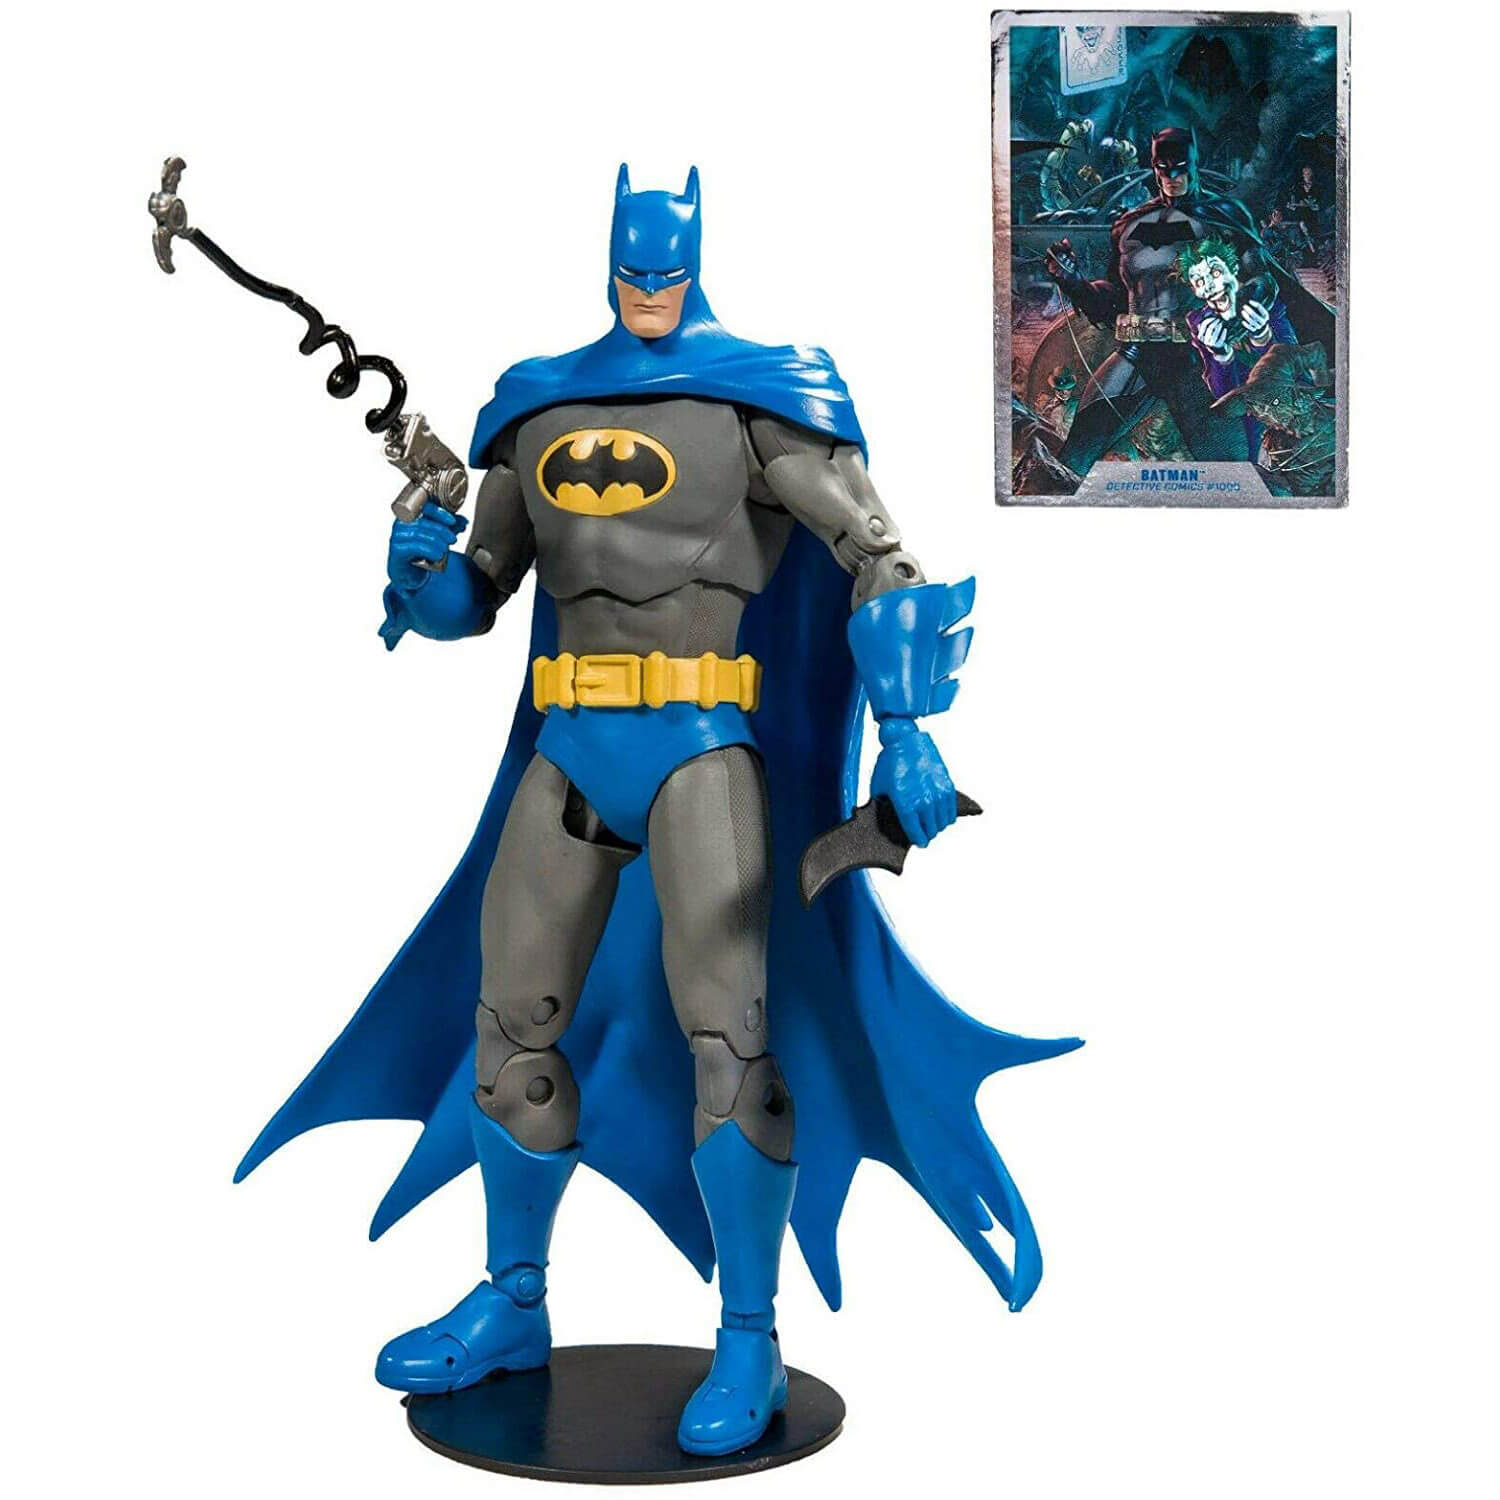 DC Multiverse Modern Batman Alternate Action Figure